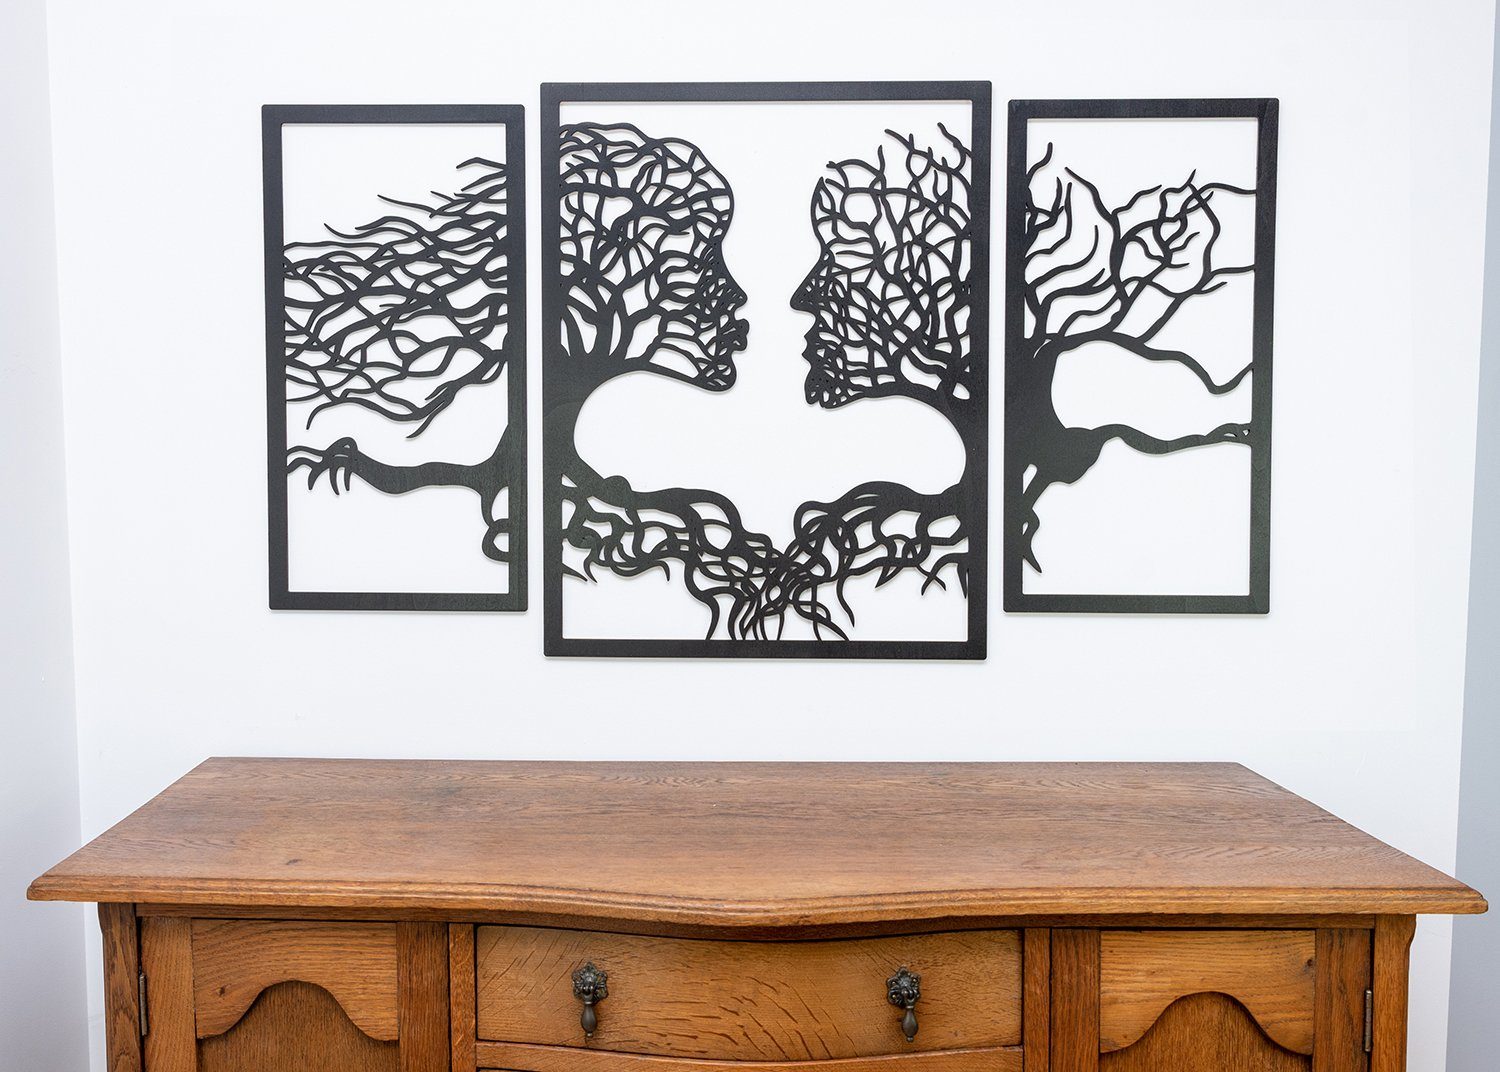 ORNAMENTI Holzbild Wanddekoration, Baum, 3D Handmade grosse Gesichter Wandpaneel